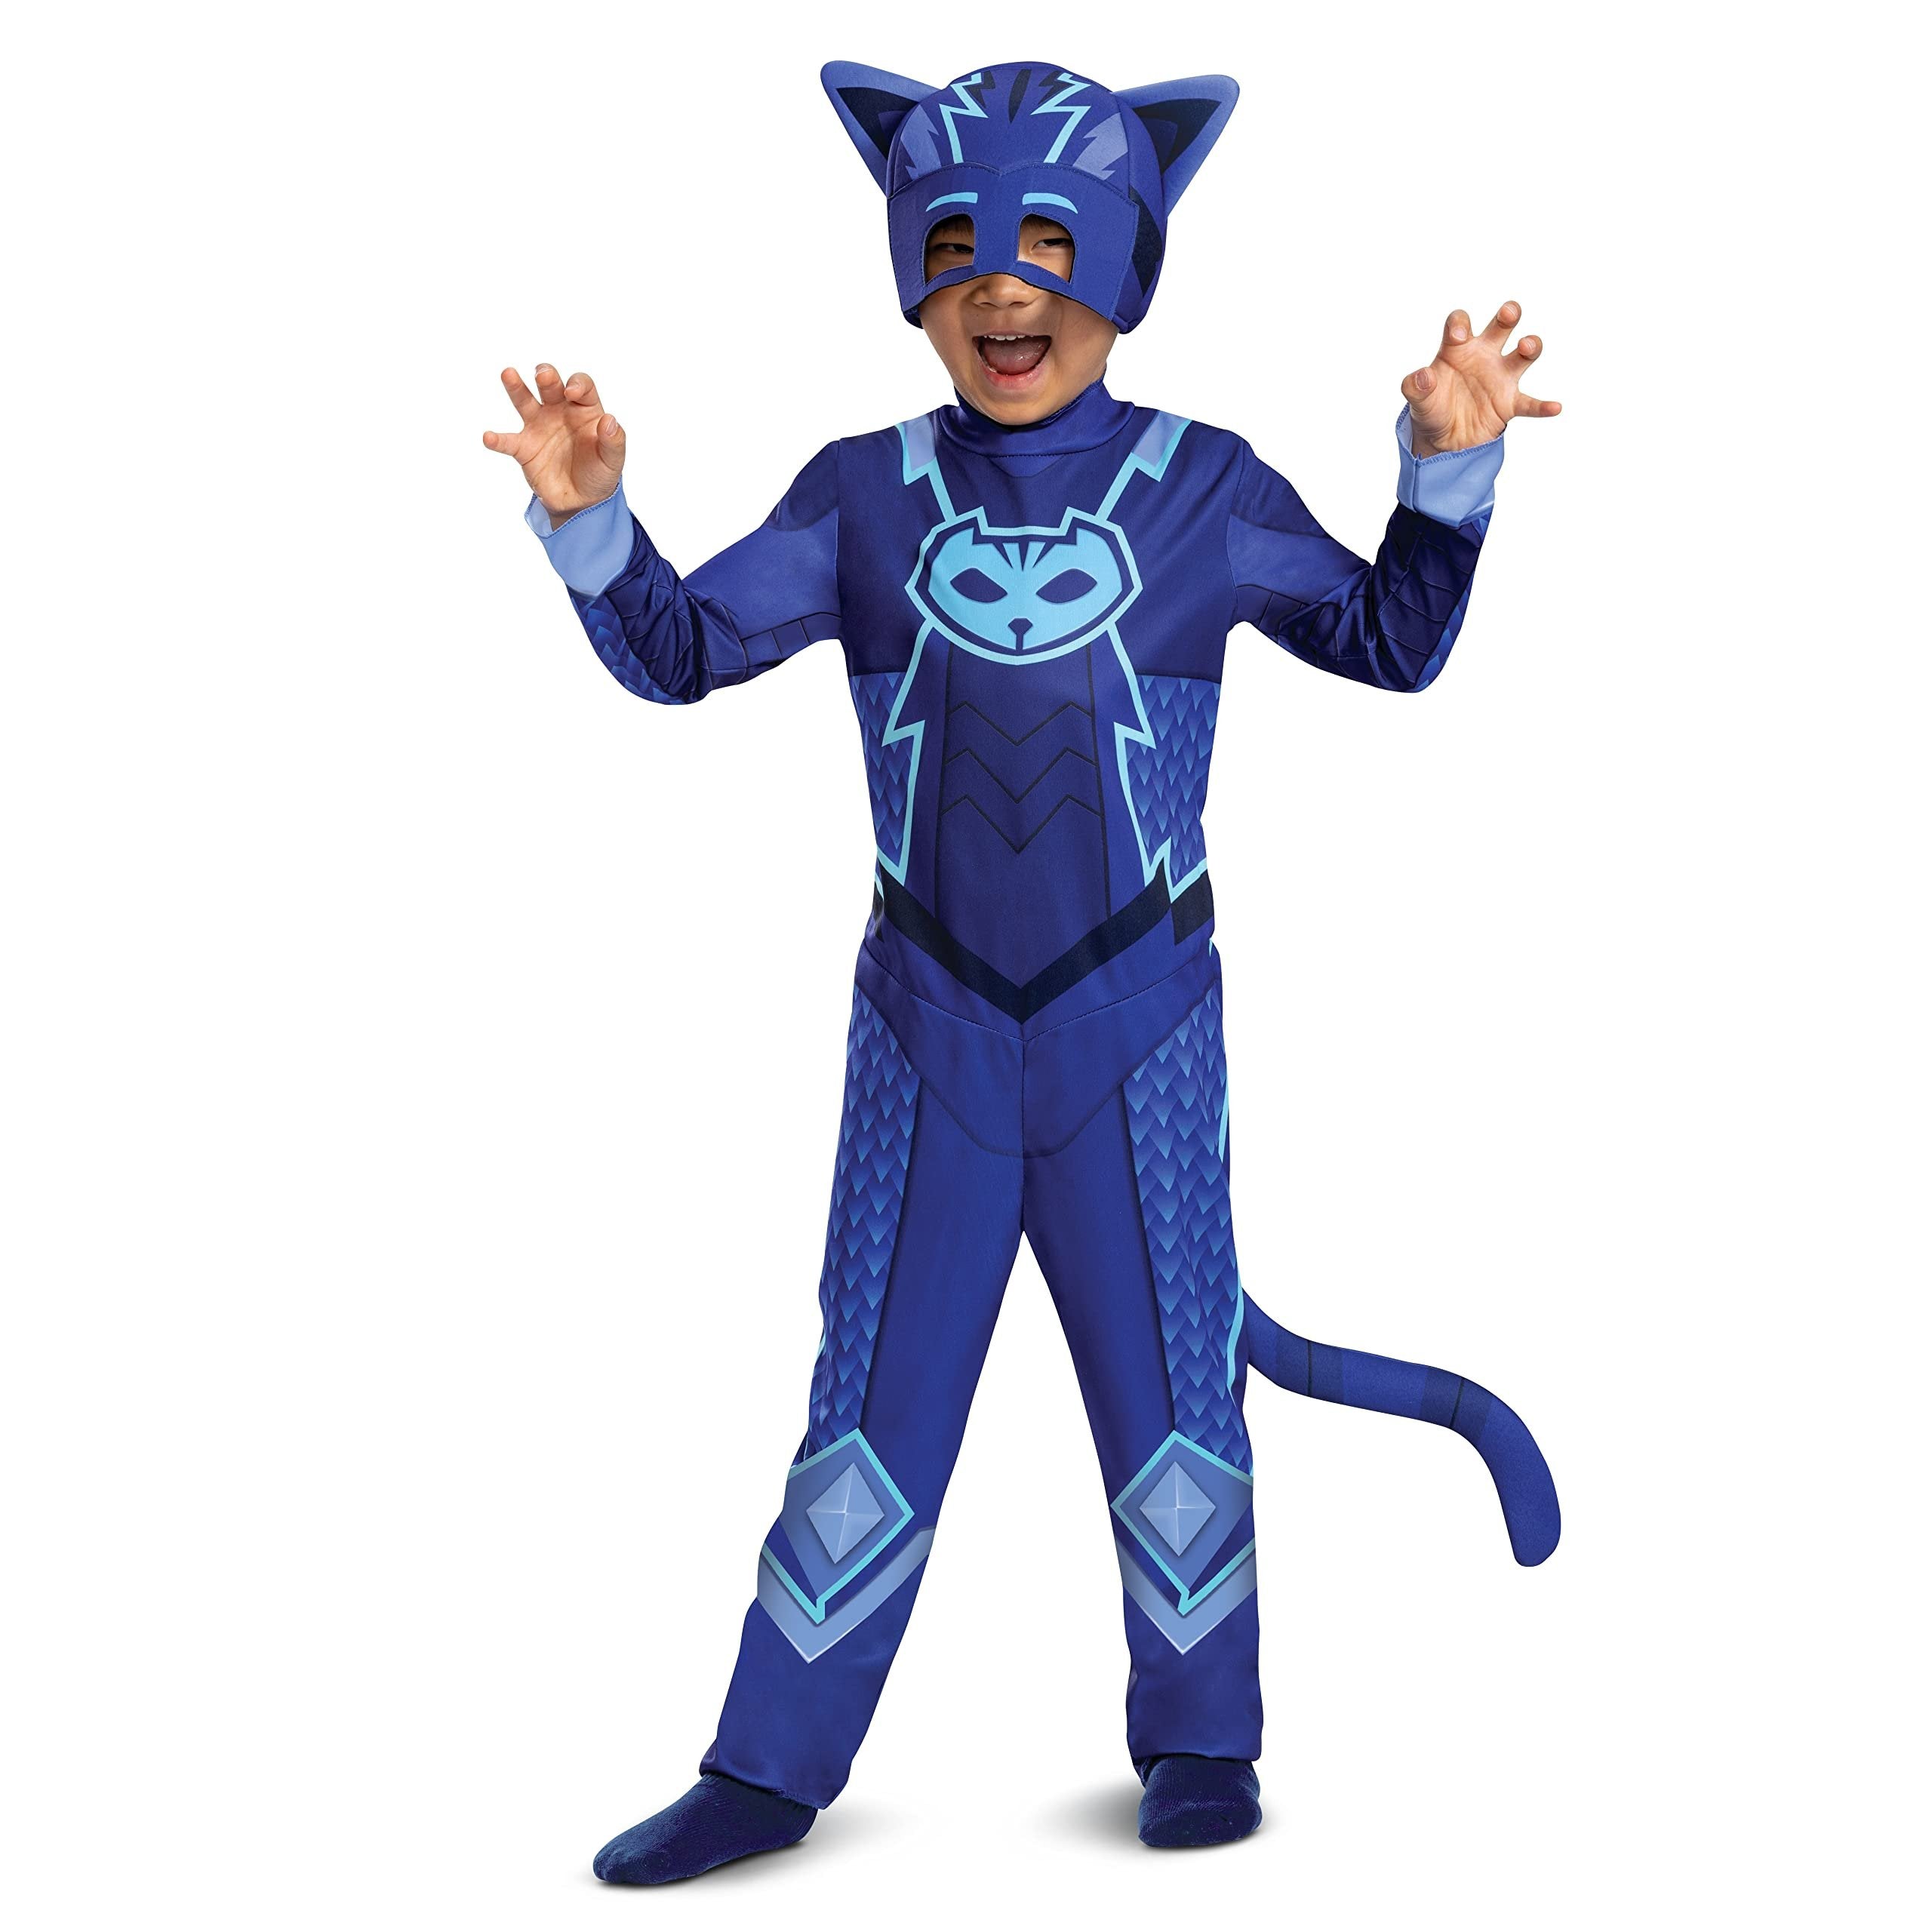 Disguise Catboy Costume for Kids, Official PJ Masks Megasuit Costume Jumpsuit and Mask, Toddler Size Medium (3T-4T)